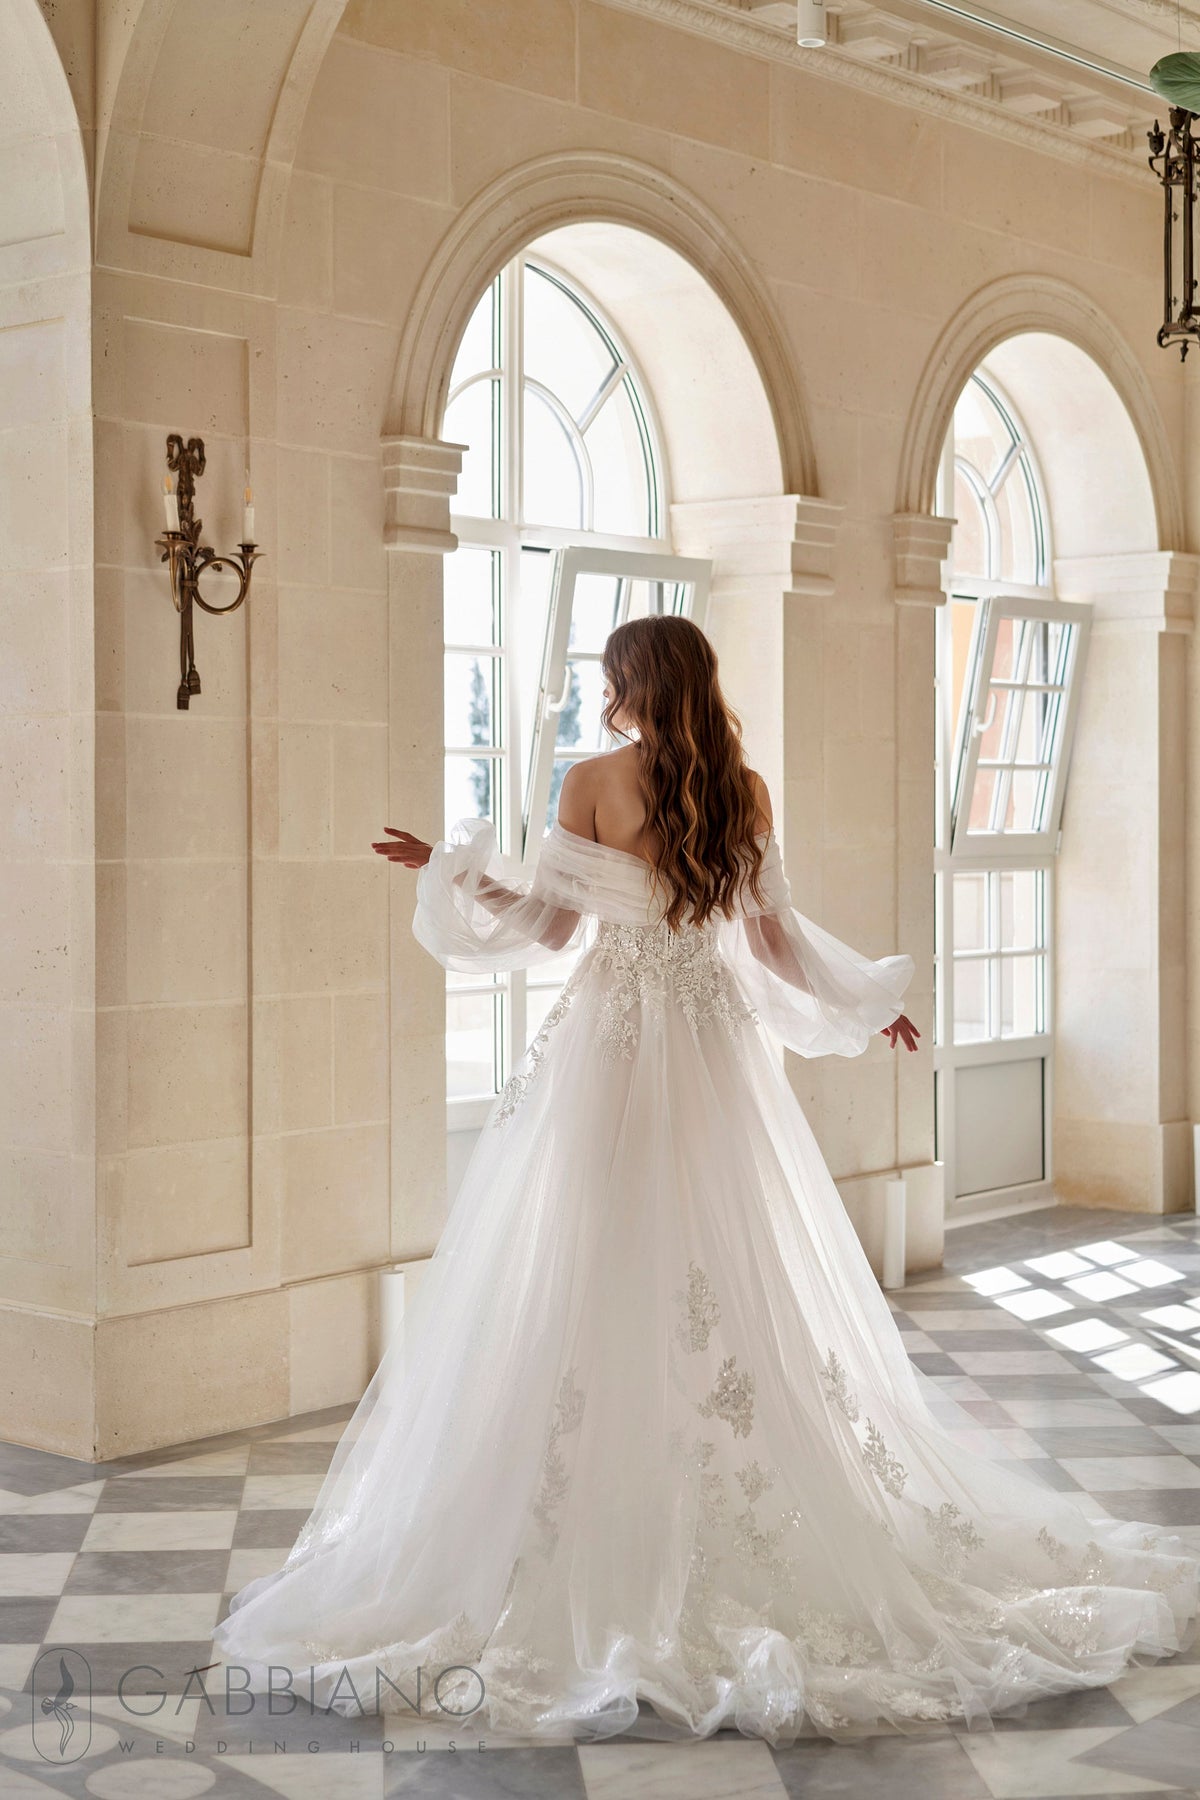 Transformer Aline Wedding Dress Detachable Sleeves Strapless Off the Shoulder Bridal Gown Bustier Sweetheart Neckline Open Back Backless